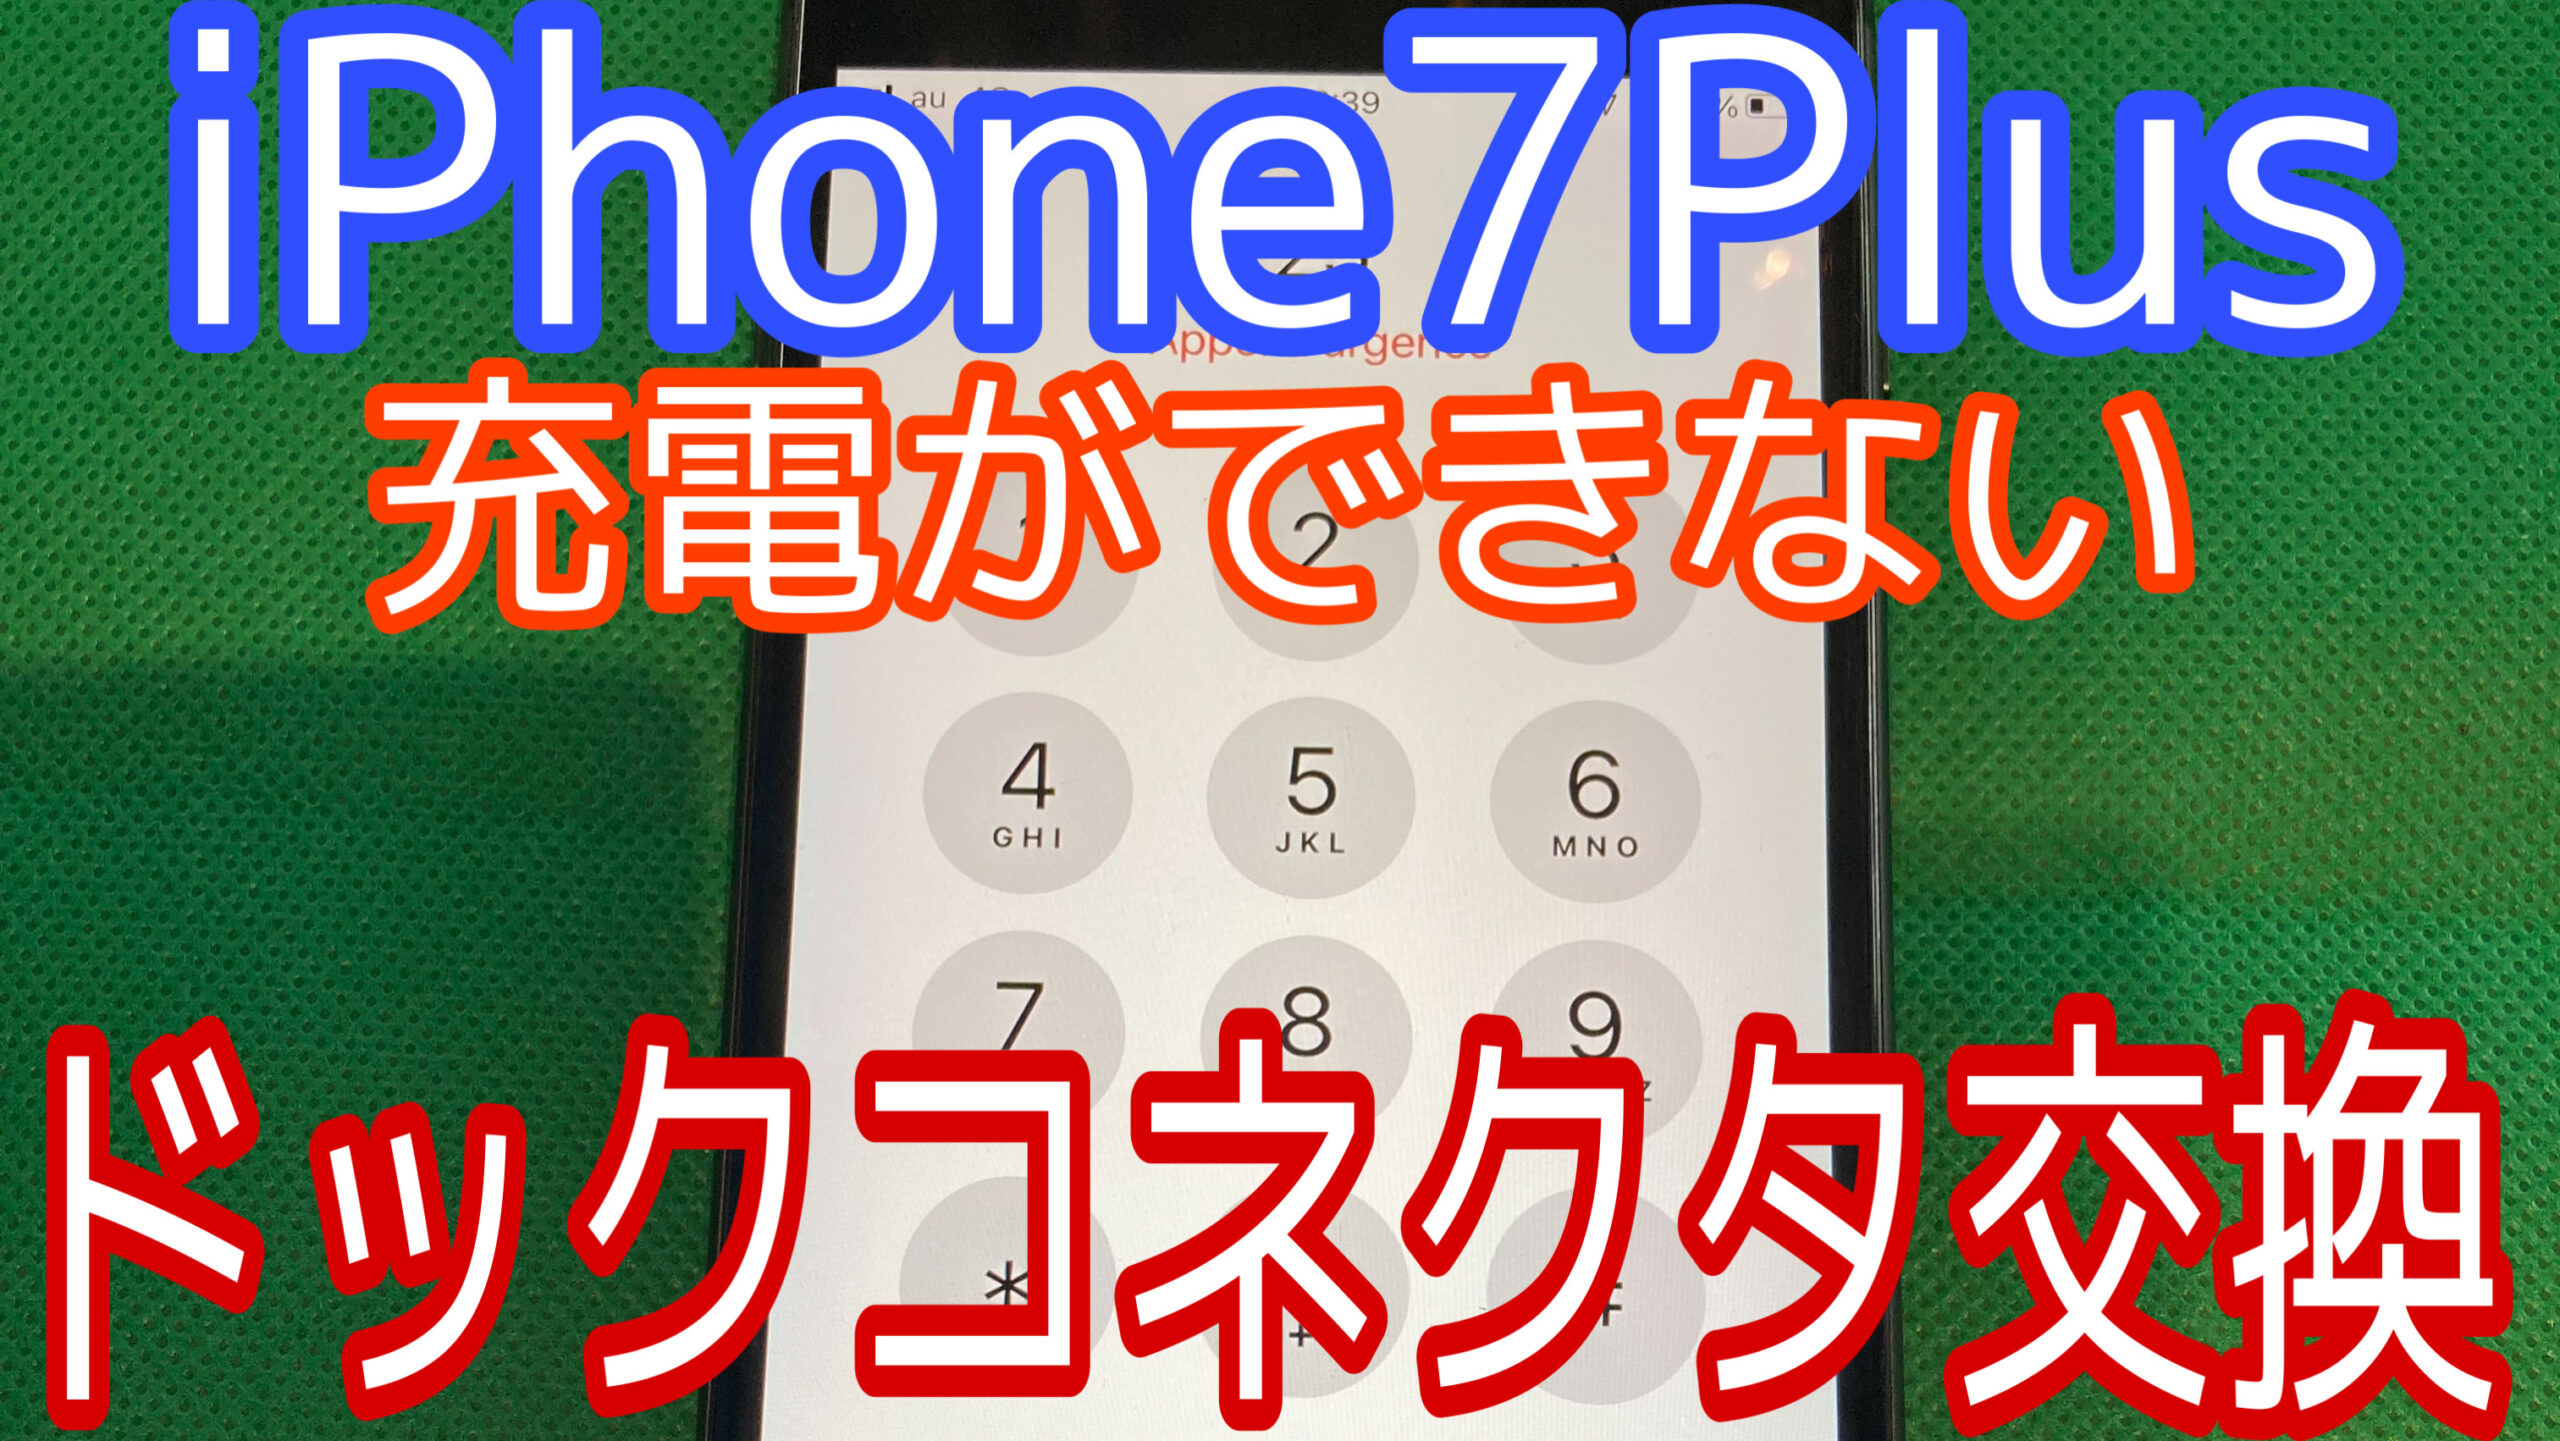 iPhone7Plusアイキャッチ画像